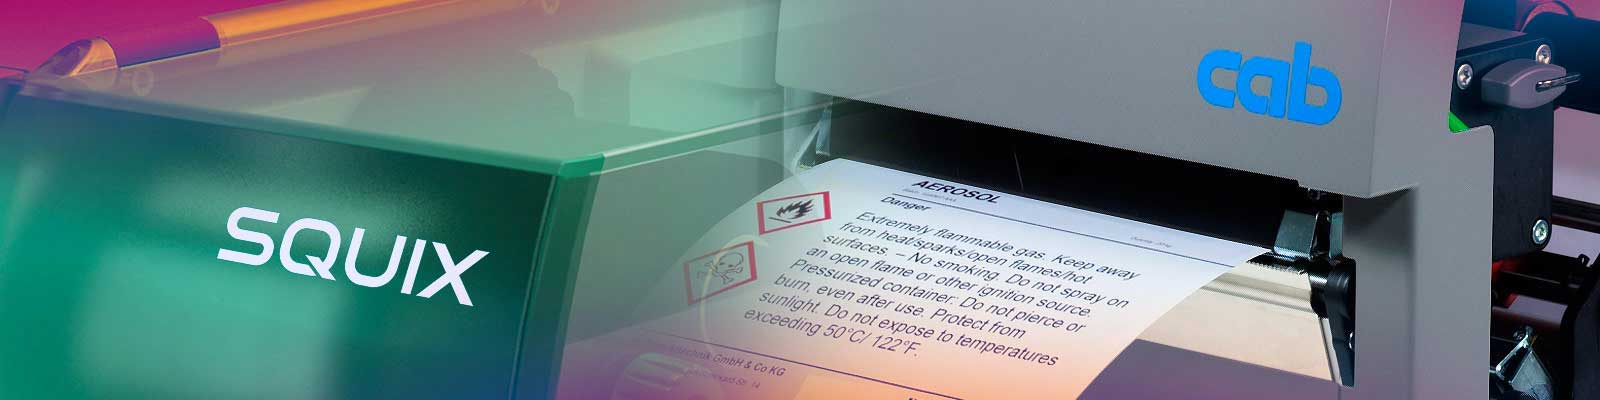 Impresoras Etiquetas Material Textil Cab